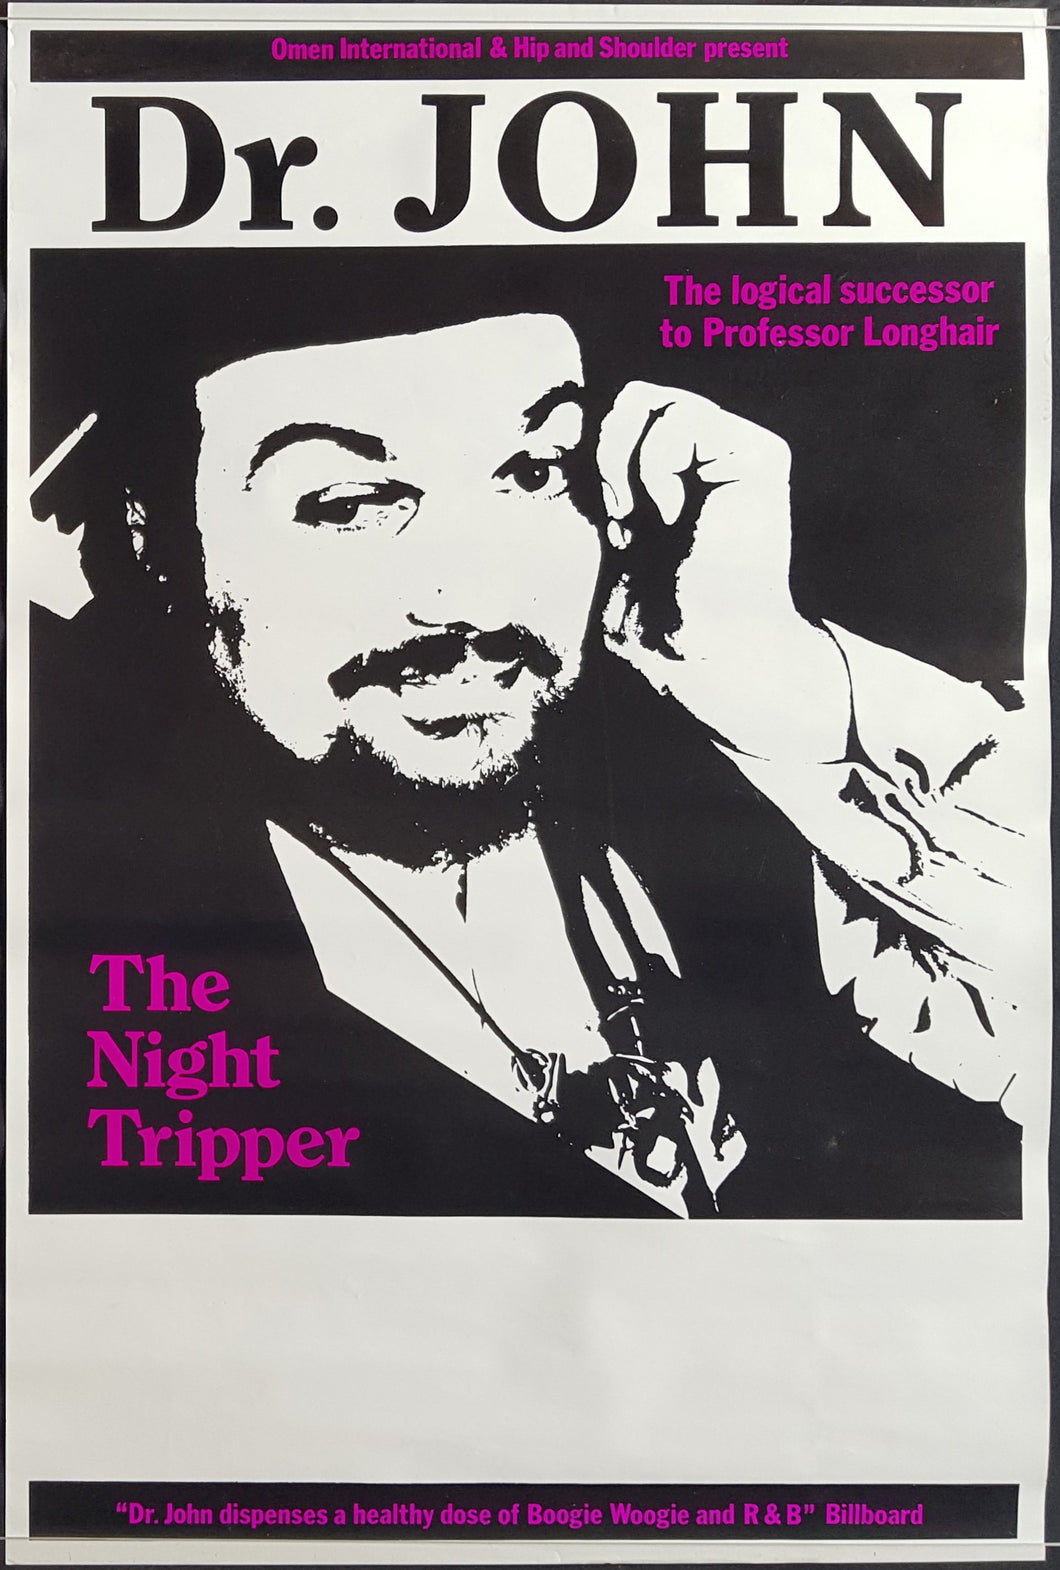 Dr.John - The Night Tripper c.1999